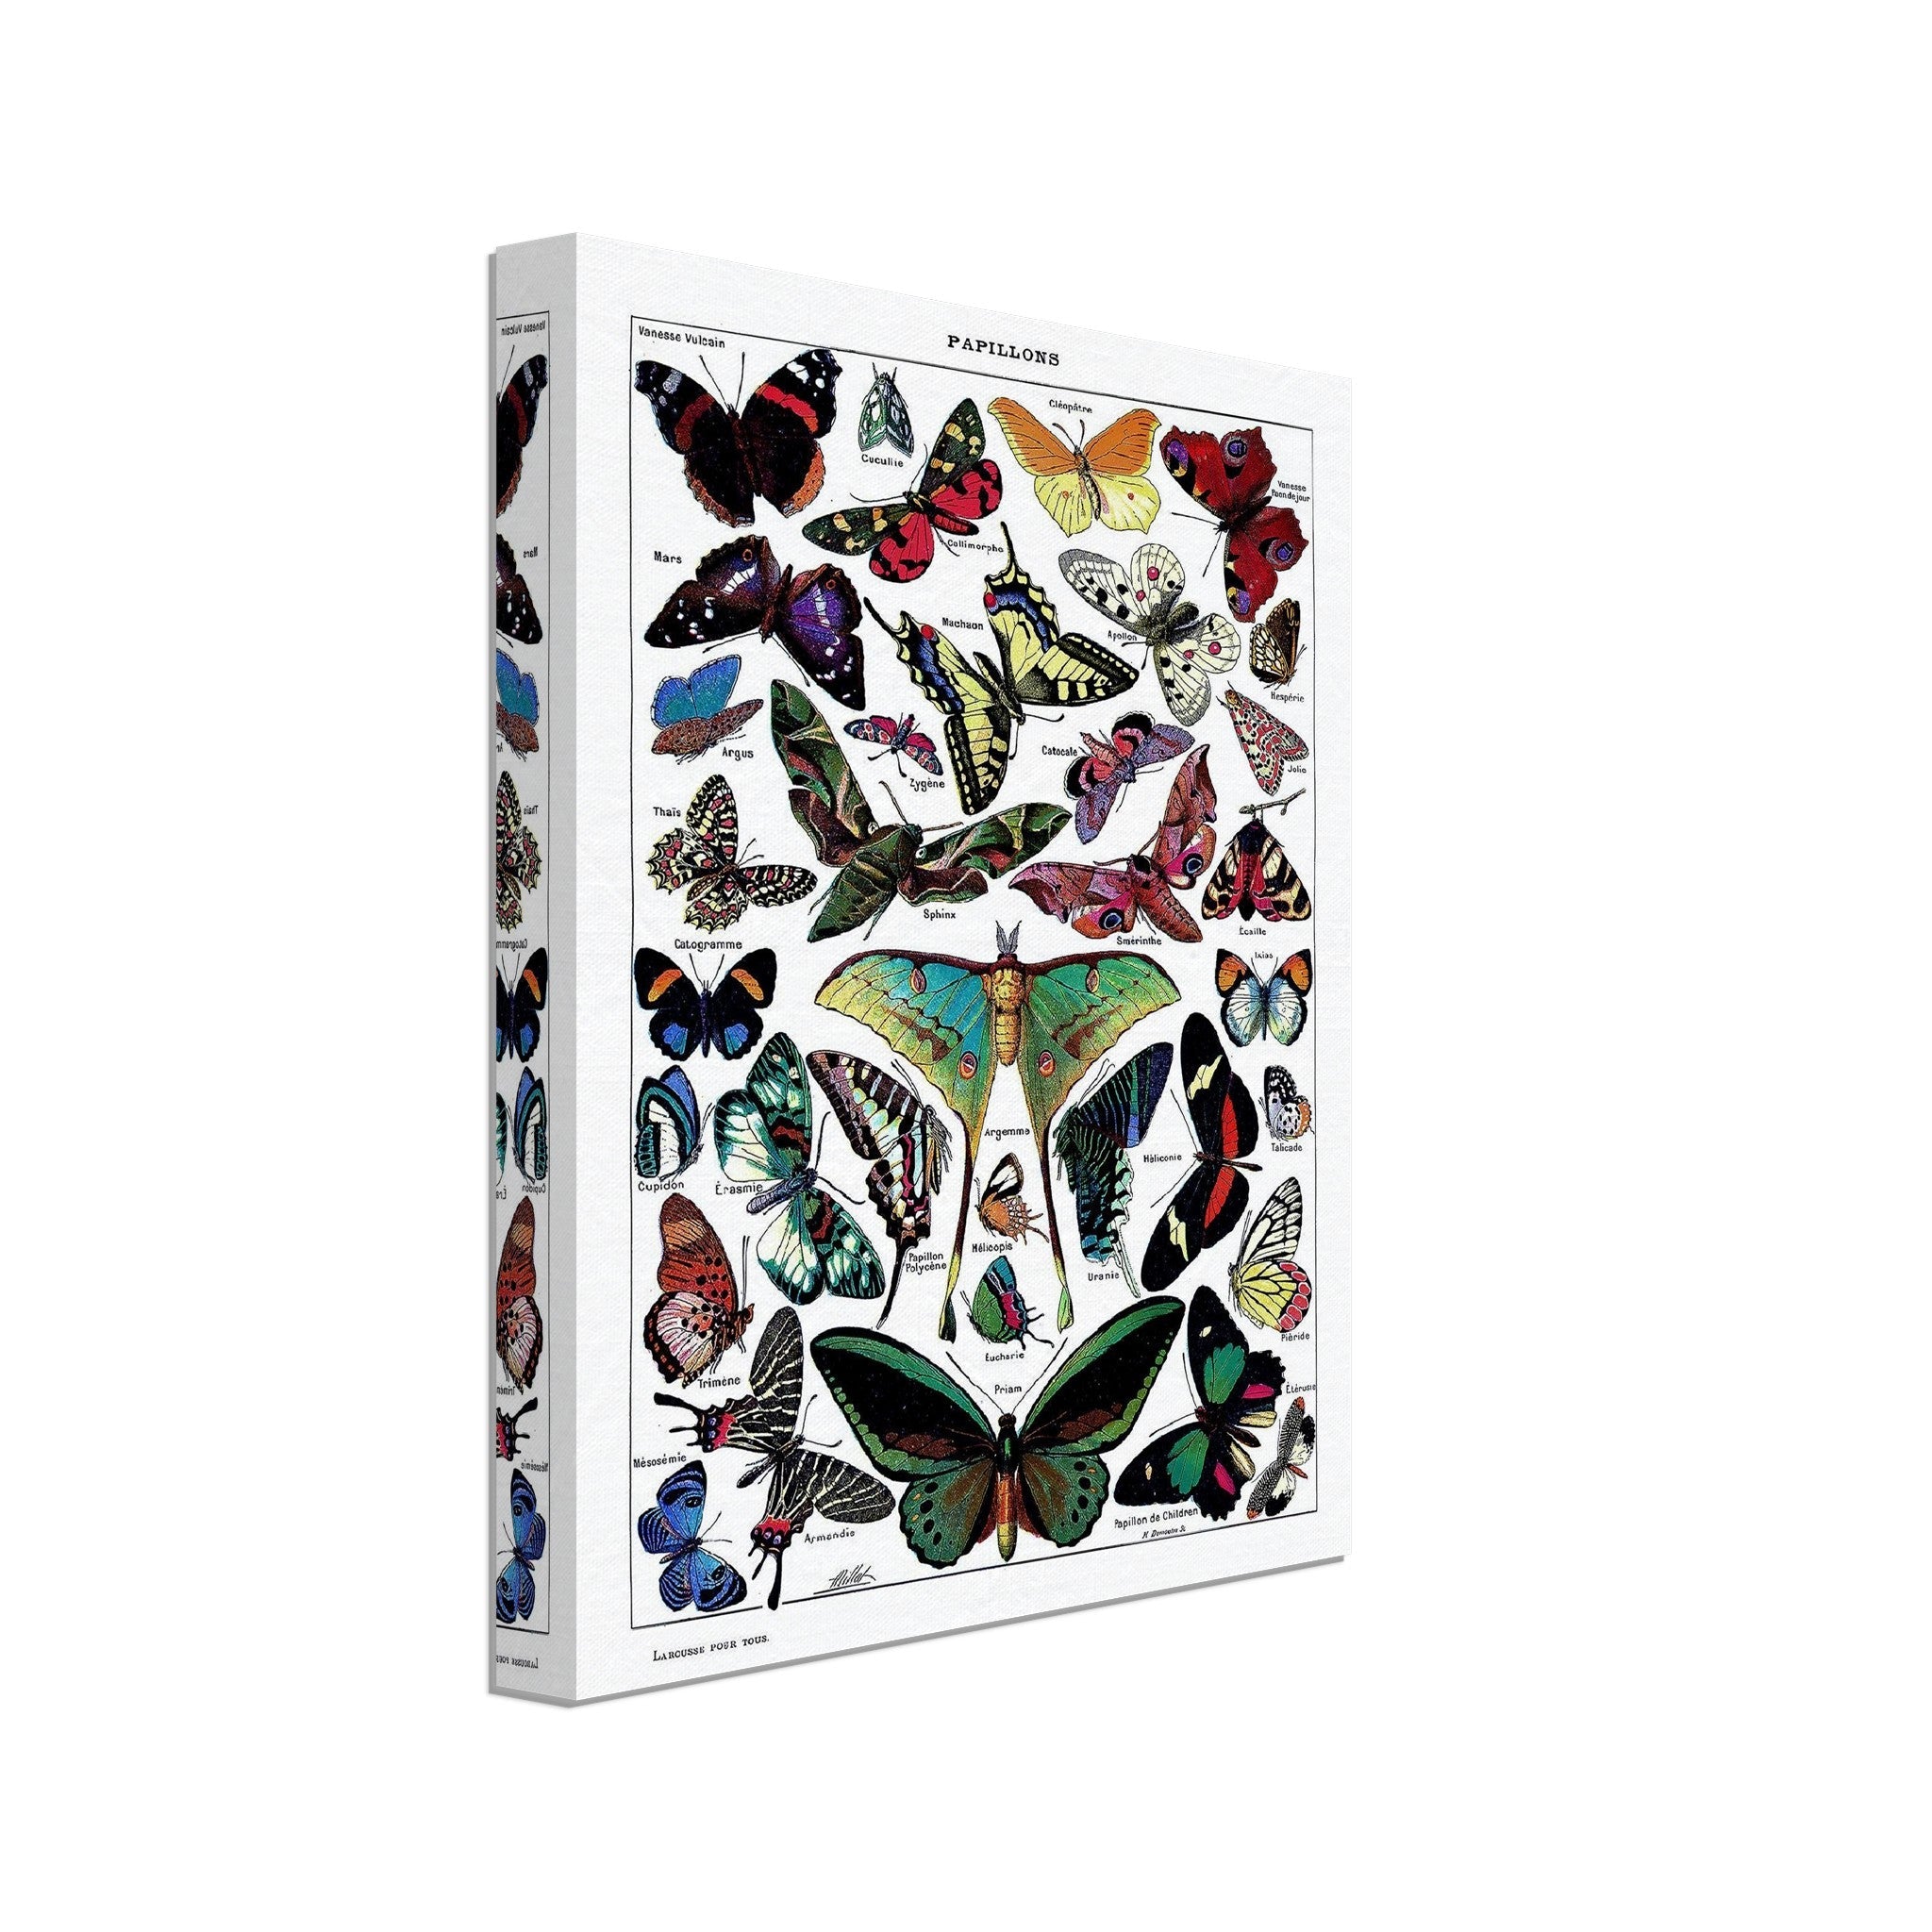 Vintage Butterfly Canvas - Adolphe Millot - Papillons (Butterfly) Canvas Print - WallArtPrints4U